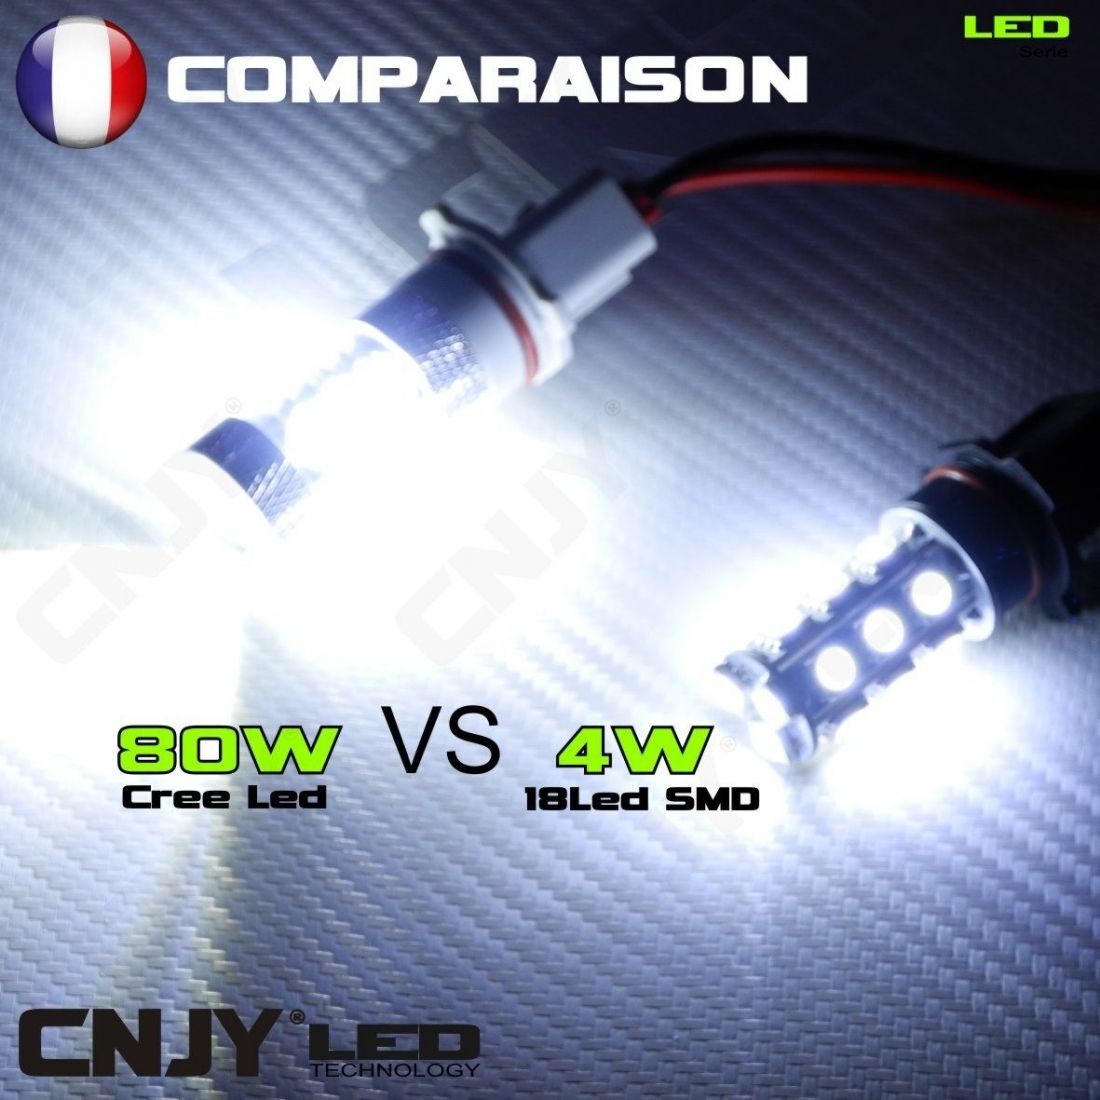  SHINYY Ampoules H7 LED Lenticulaire Phare pour Voiture